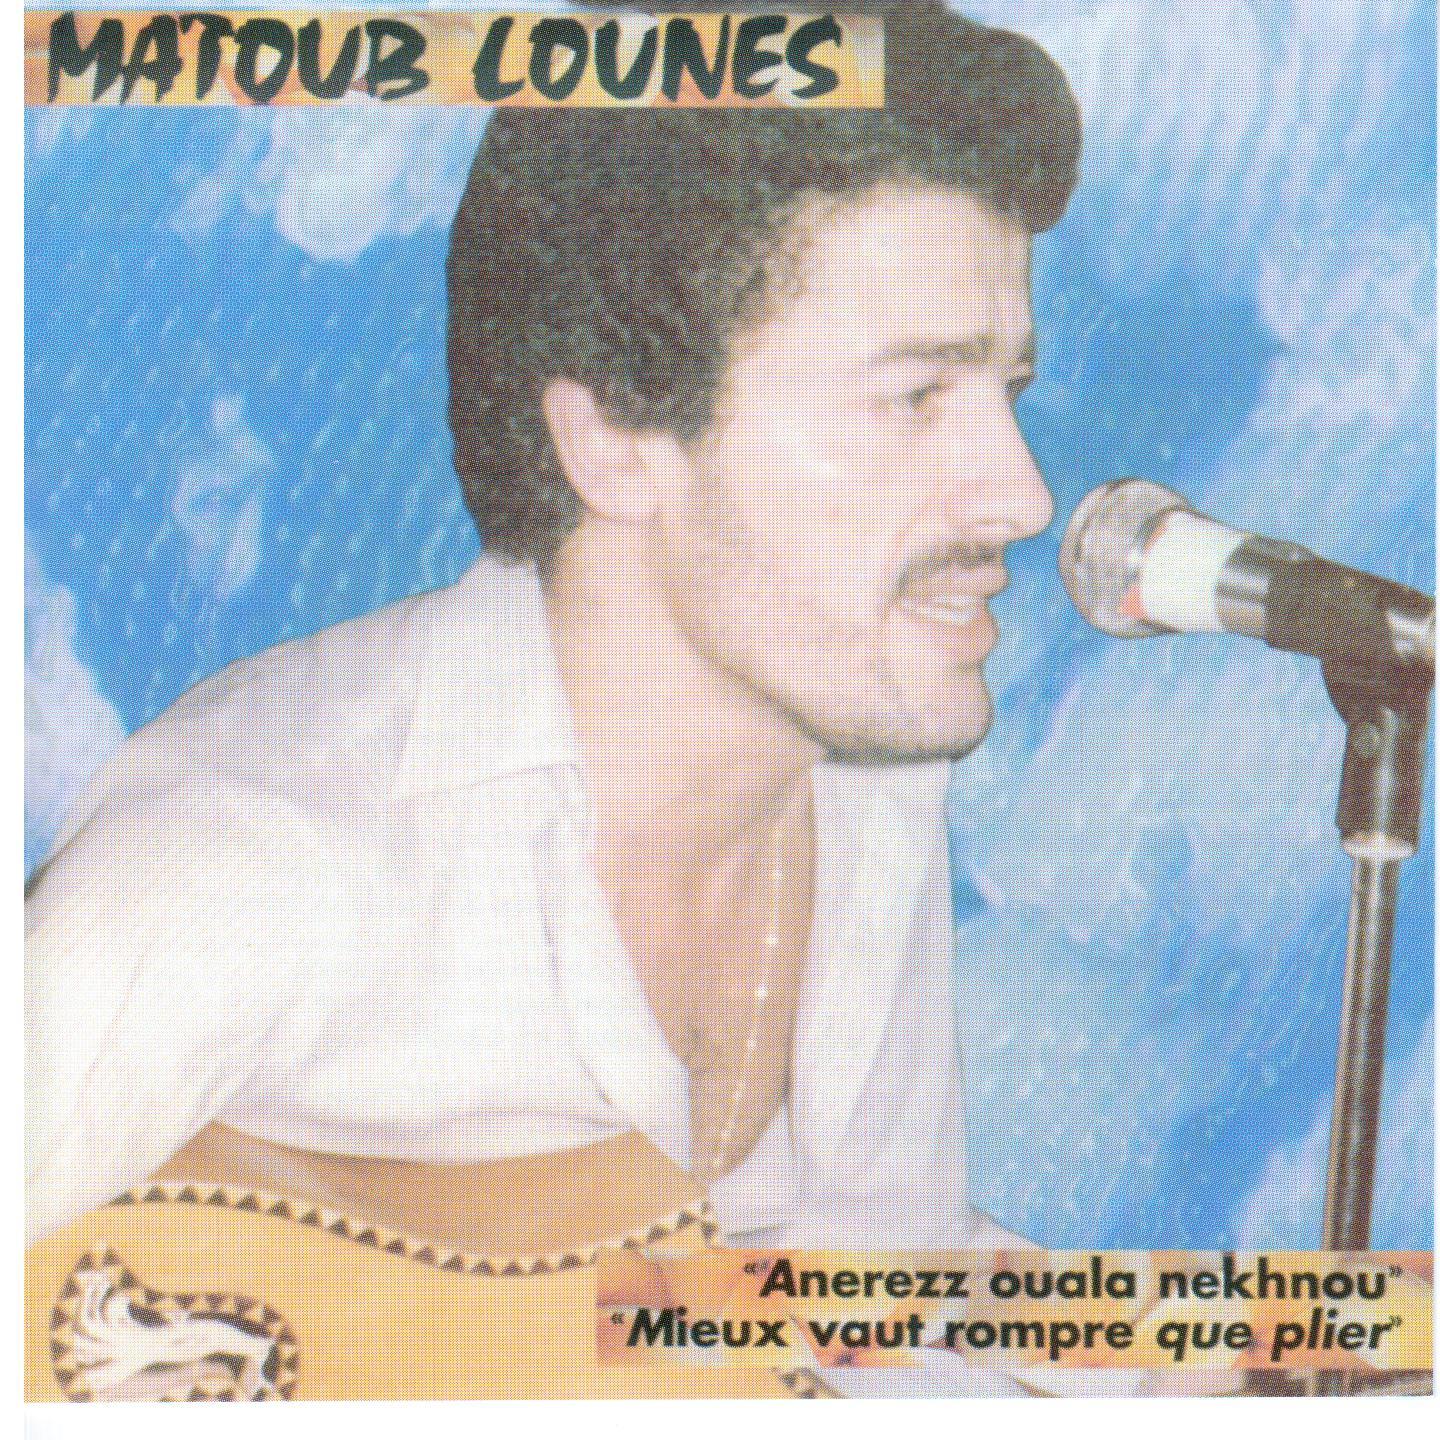 Lounès Matoub - Ouaka emdissaoulene